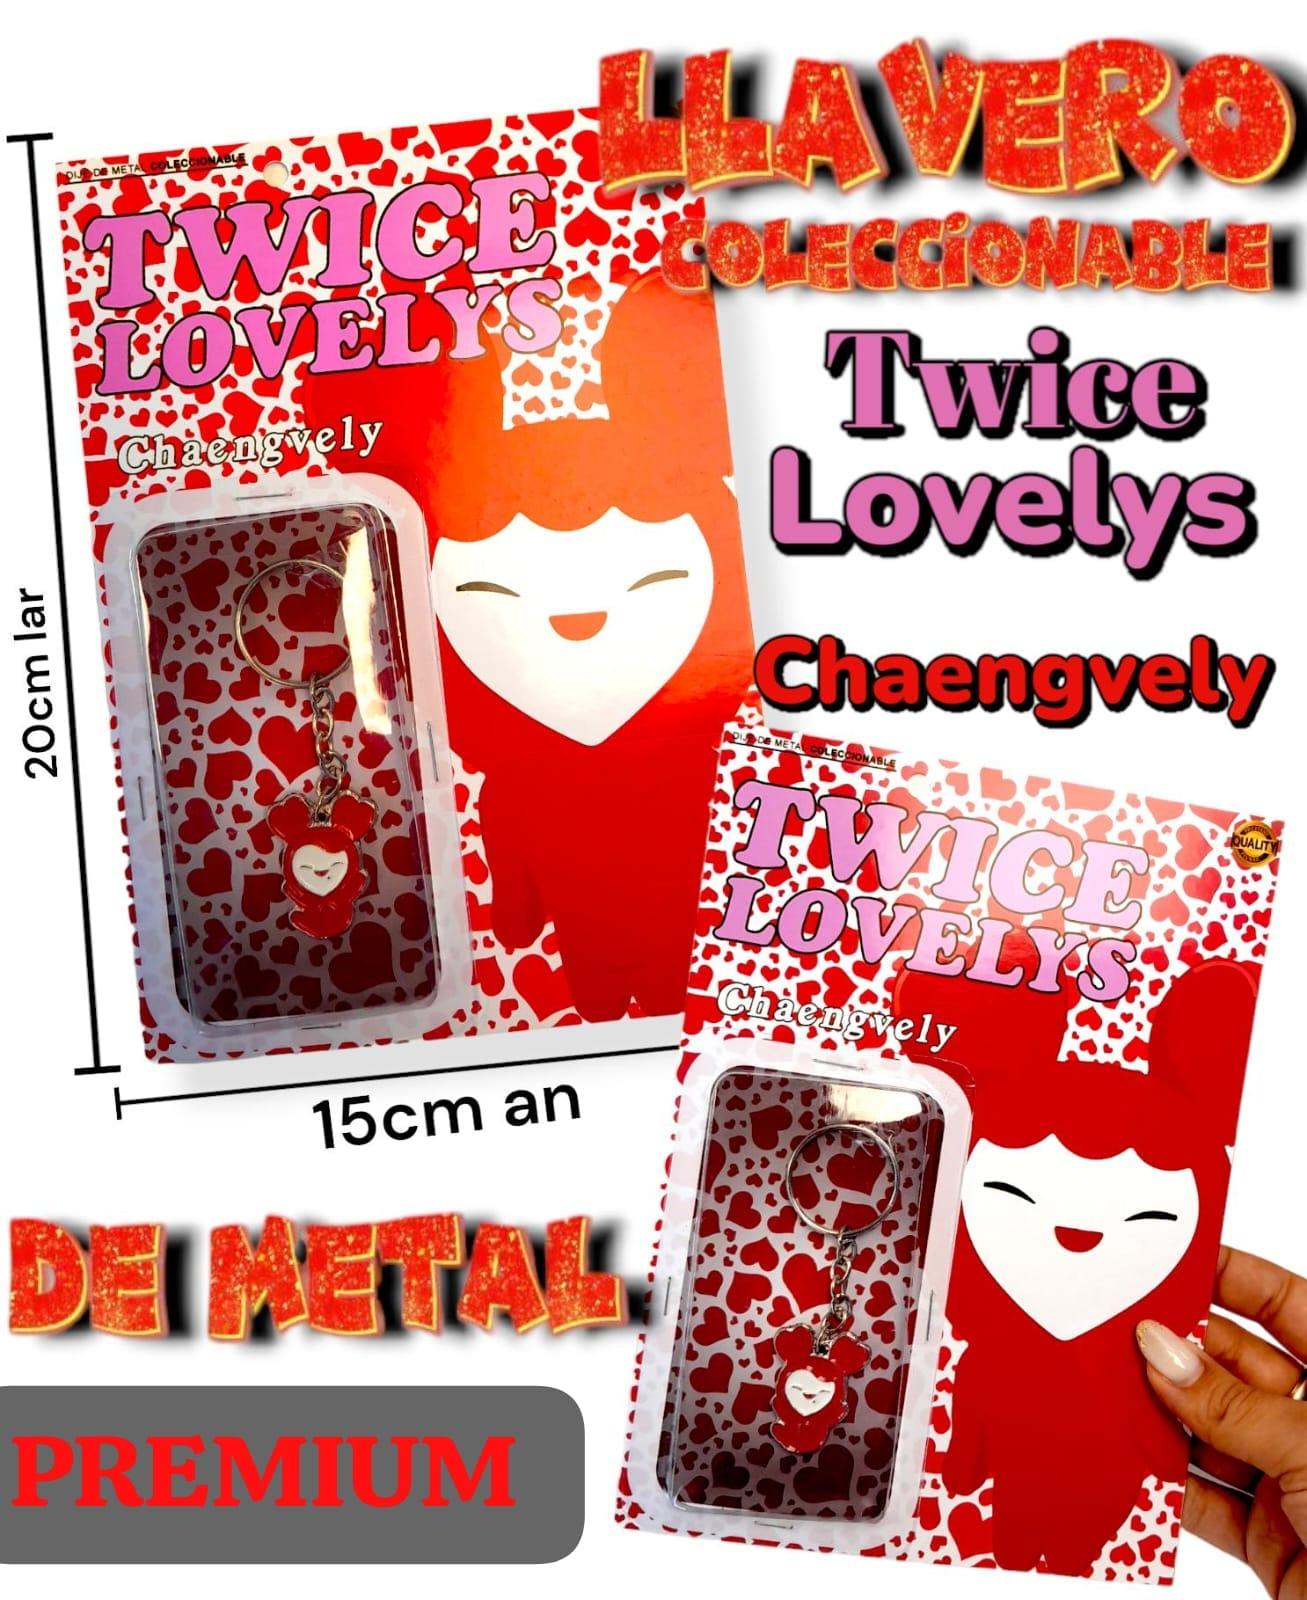 Llavero Premium Coleccionable de Mertal  Twice Lovelys (CHAENGVELY)